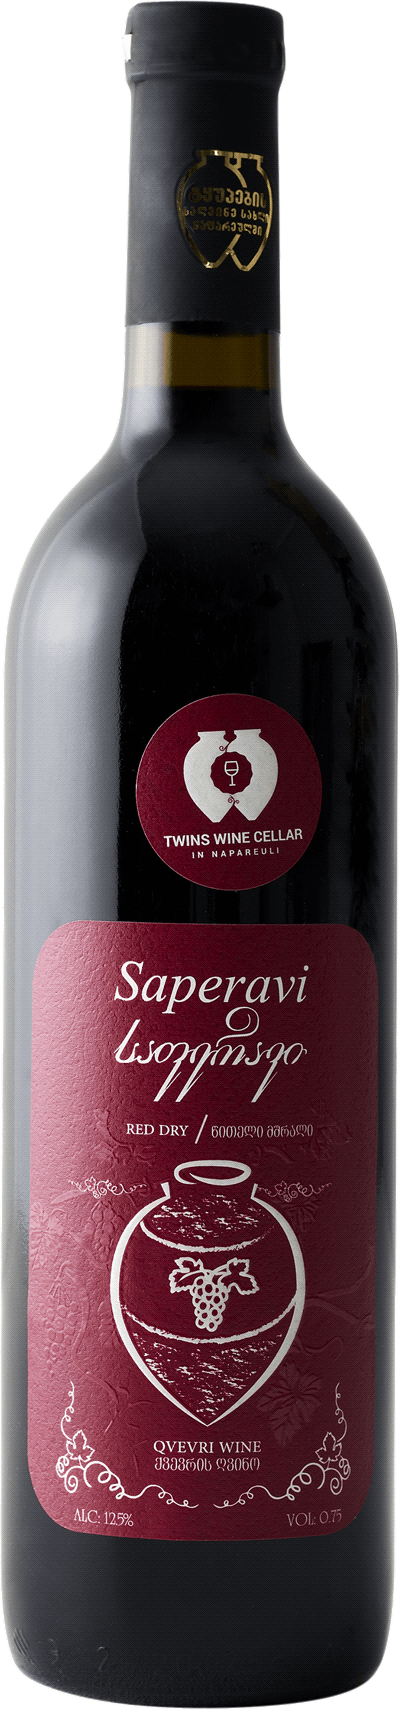 Twins Wine Cellar Saperavi